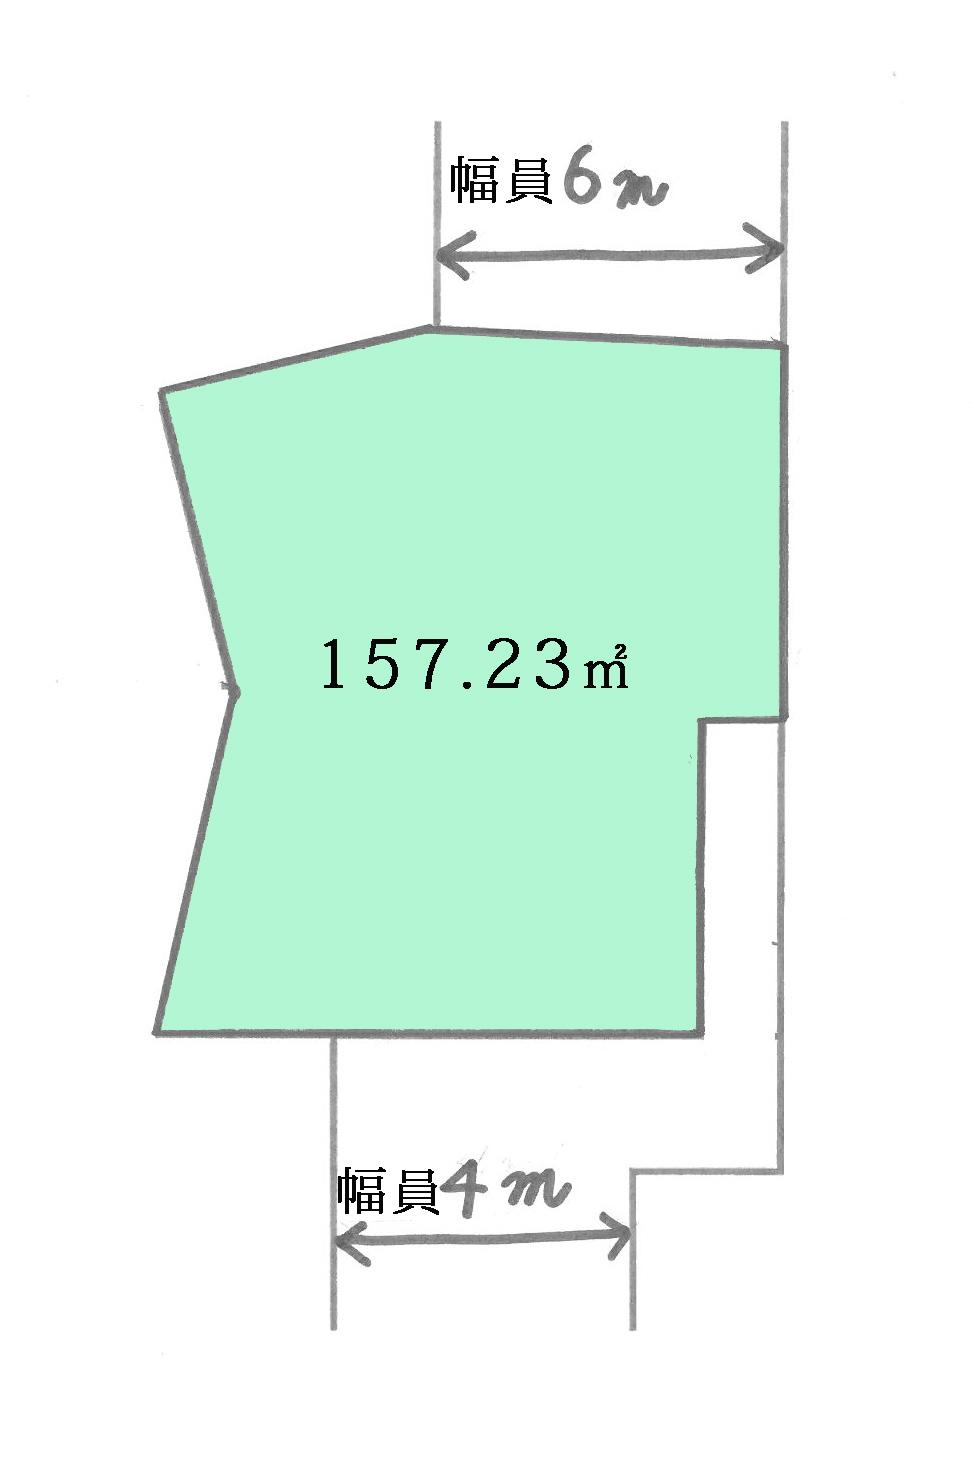 Compartment figure. Land price 20.5 million yen, Land area 157.23 sq m